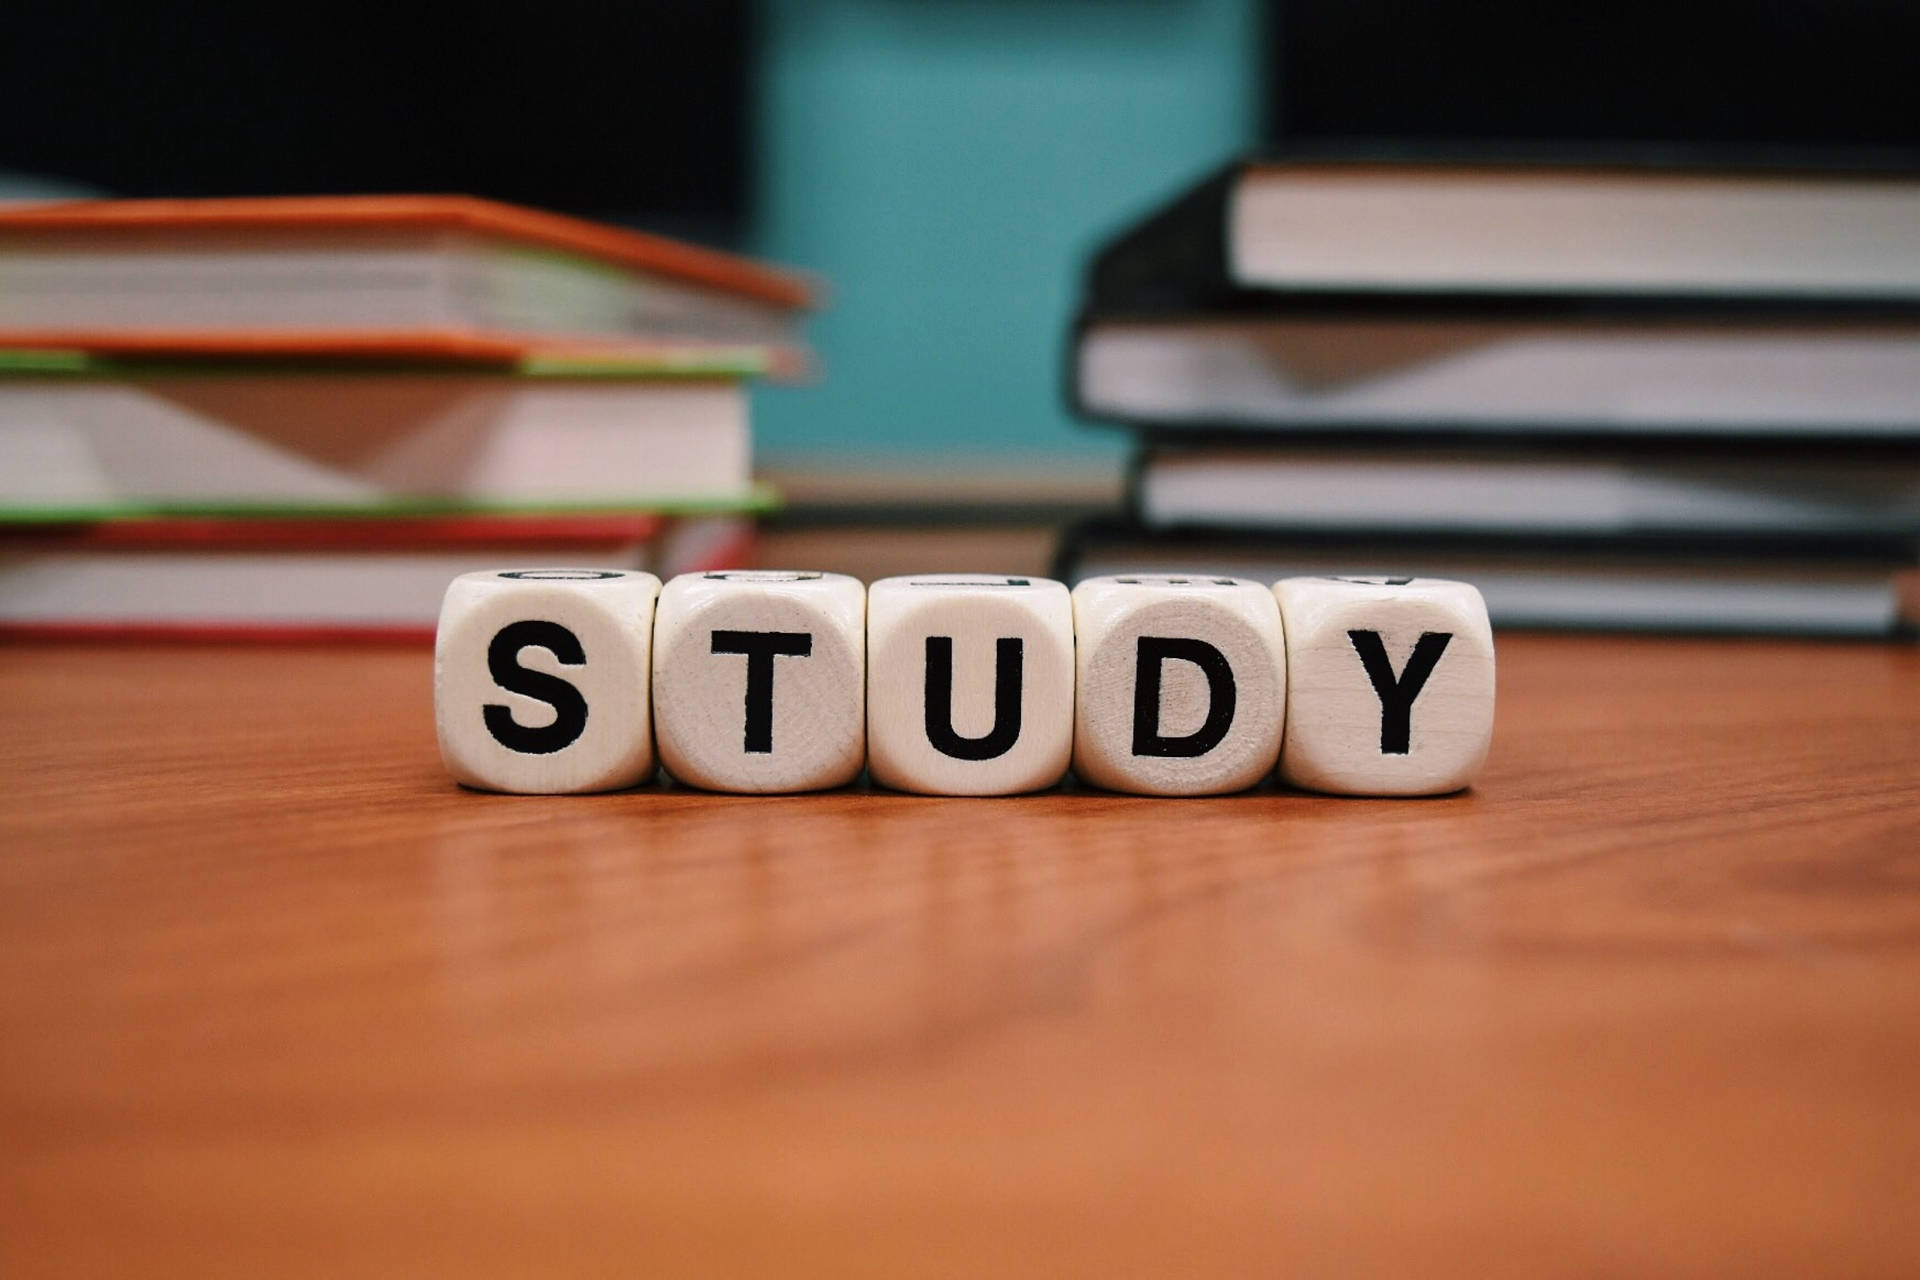 Free Study Wallpaper Downloads, Study Wallpaper for FREE